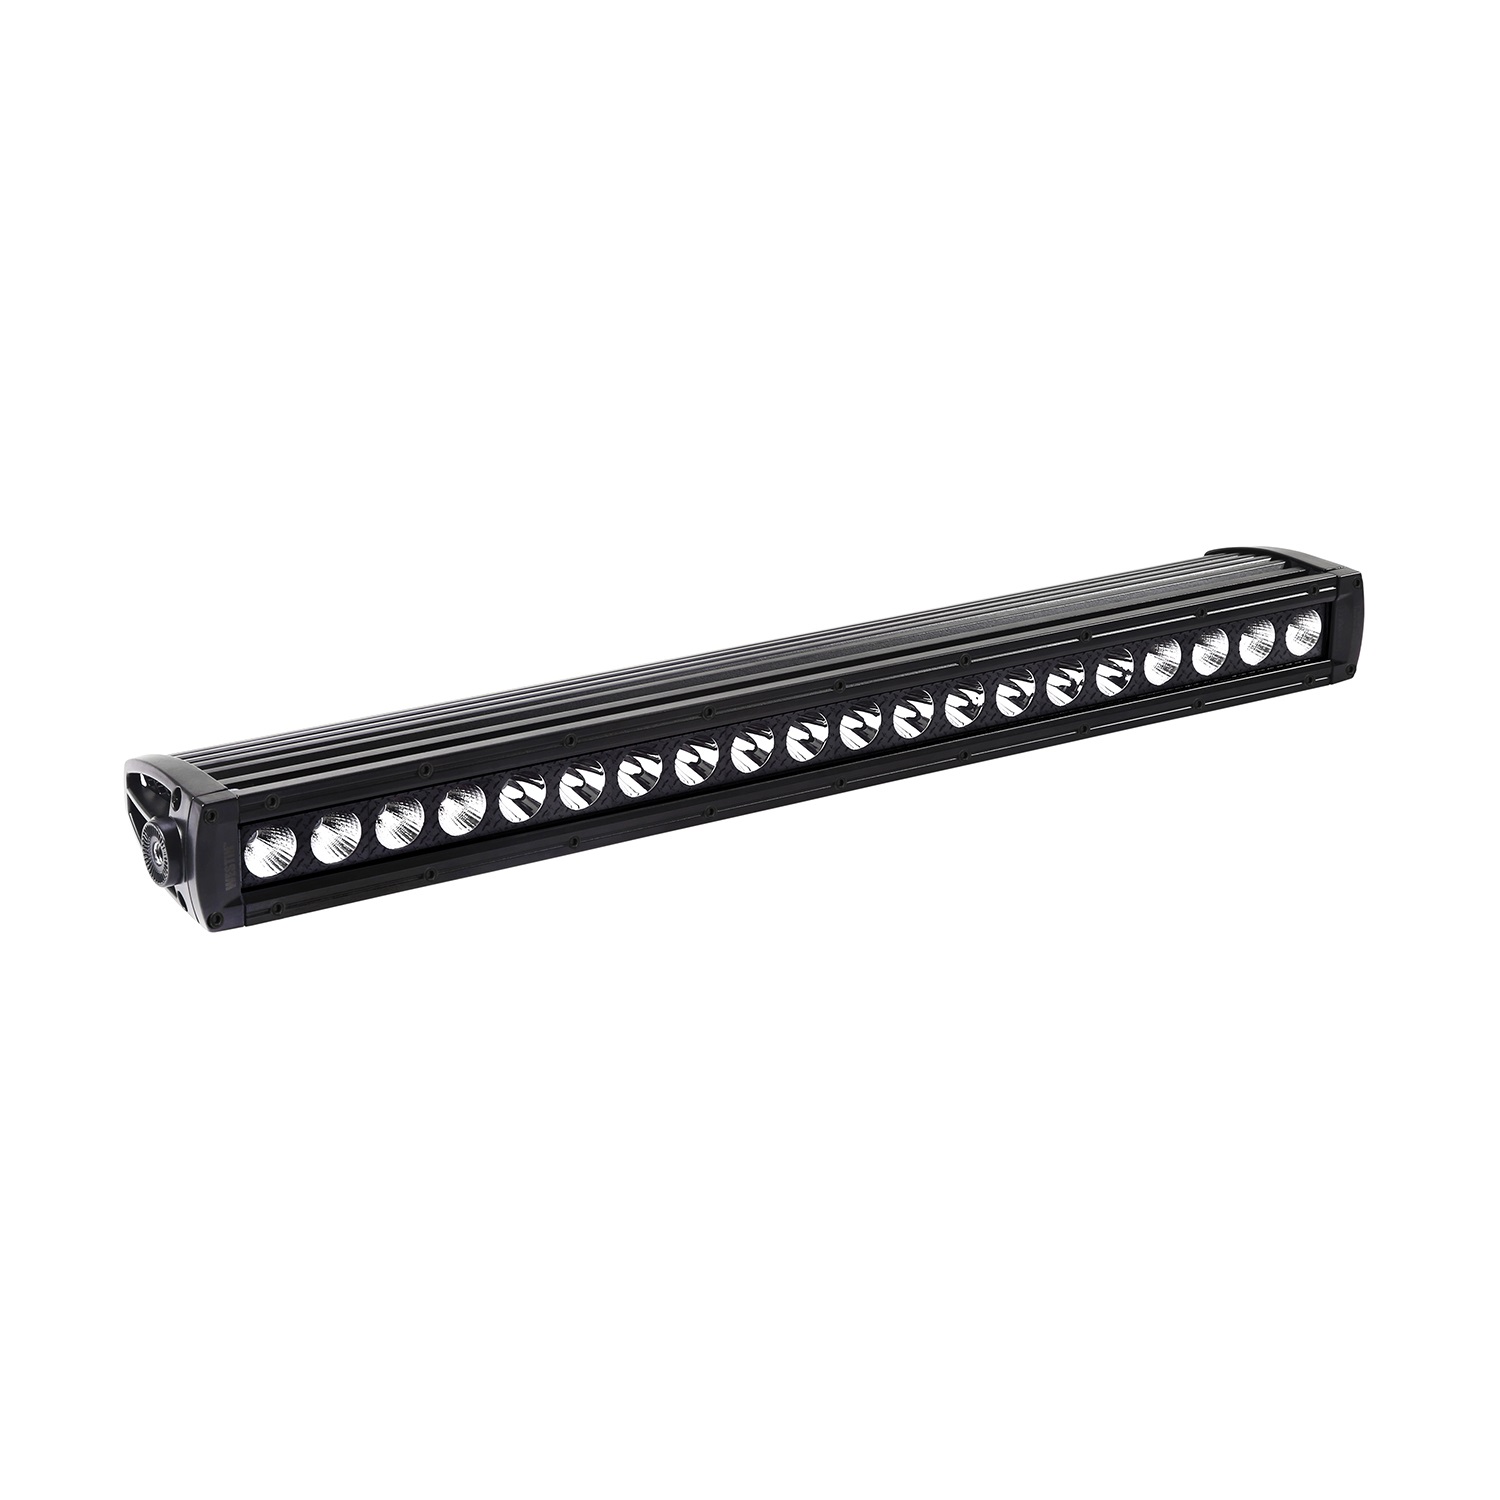 Westin 09-12211-20C B-FORCE LED Single Row Light Bar